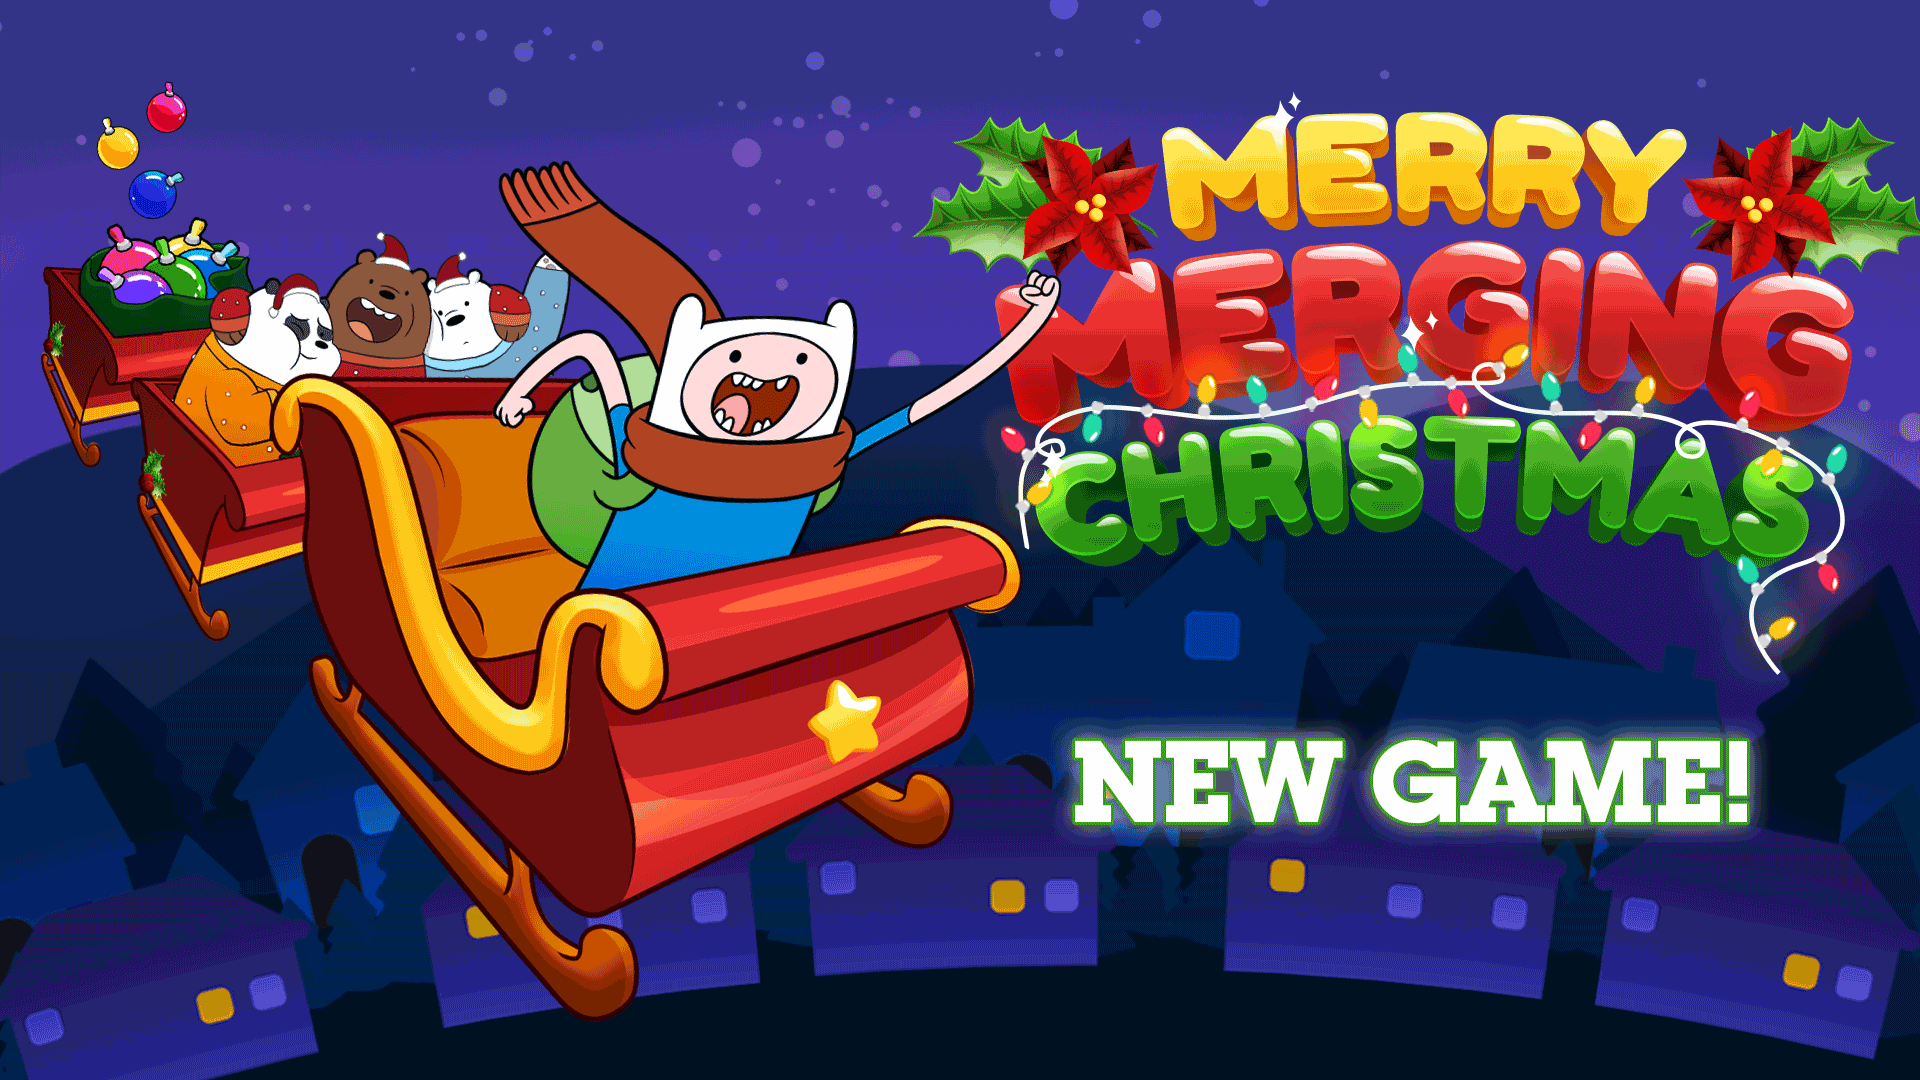 Play Christmas games | Free online Christmas games | Cartoon Network